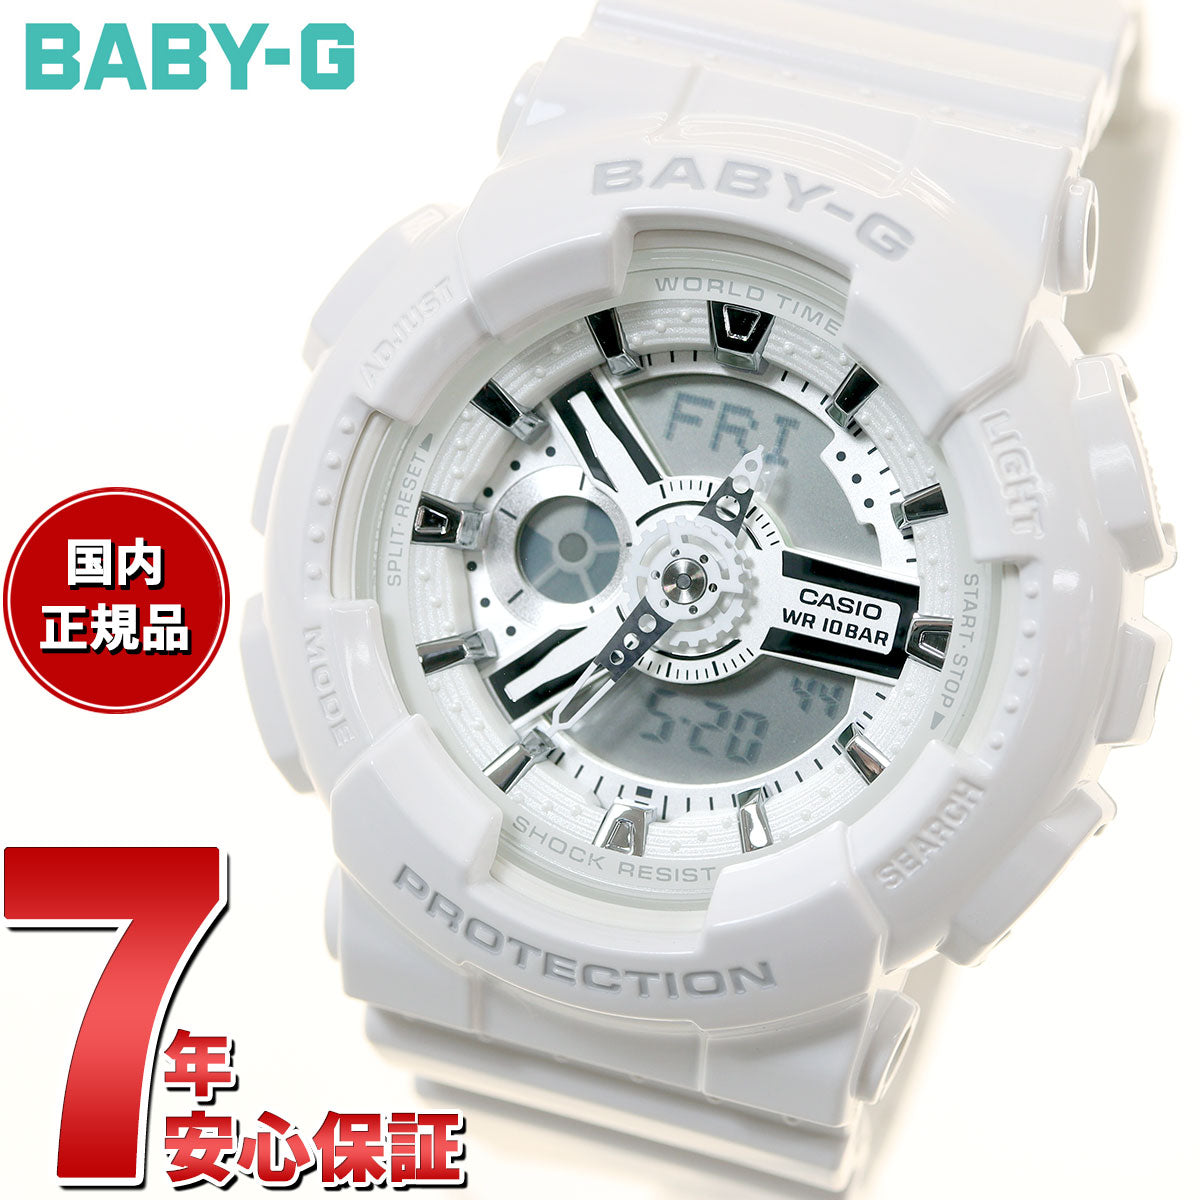 BABY-G カシオ ベビーG レディース 腕時計 ホワイト 白 アナデジ BA-110X-7A3JF